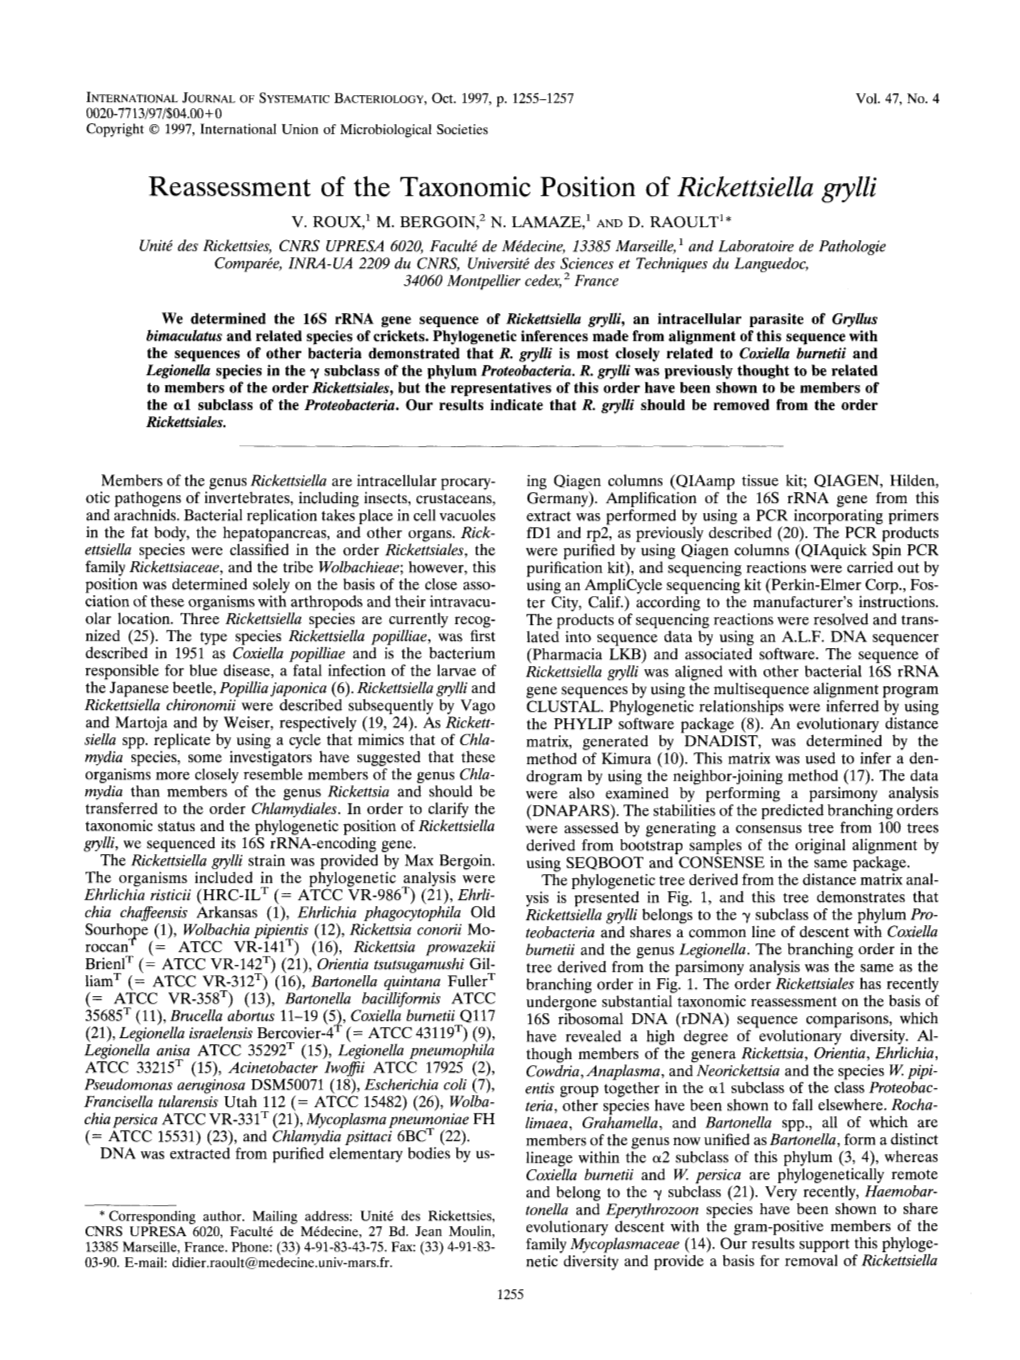 Reassessment of the Taxonomic Position of Rickettsiella Grylli V